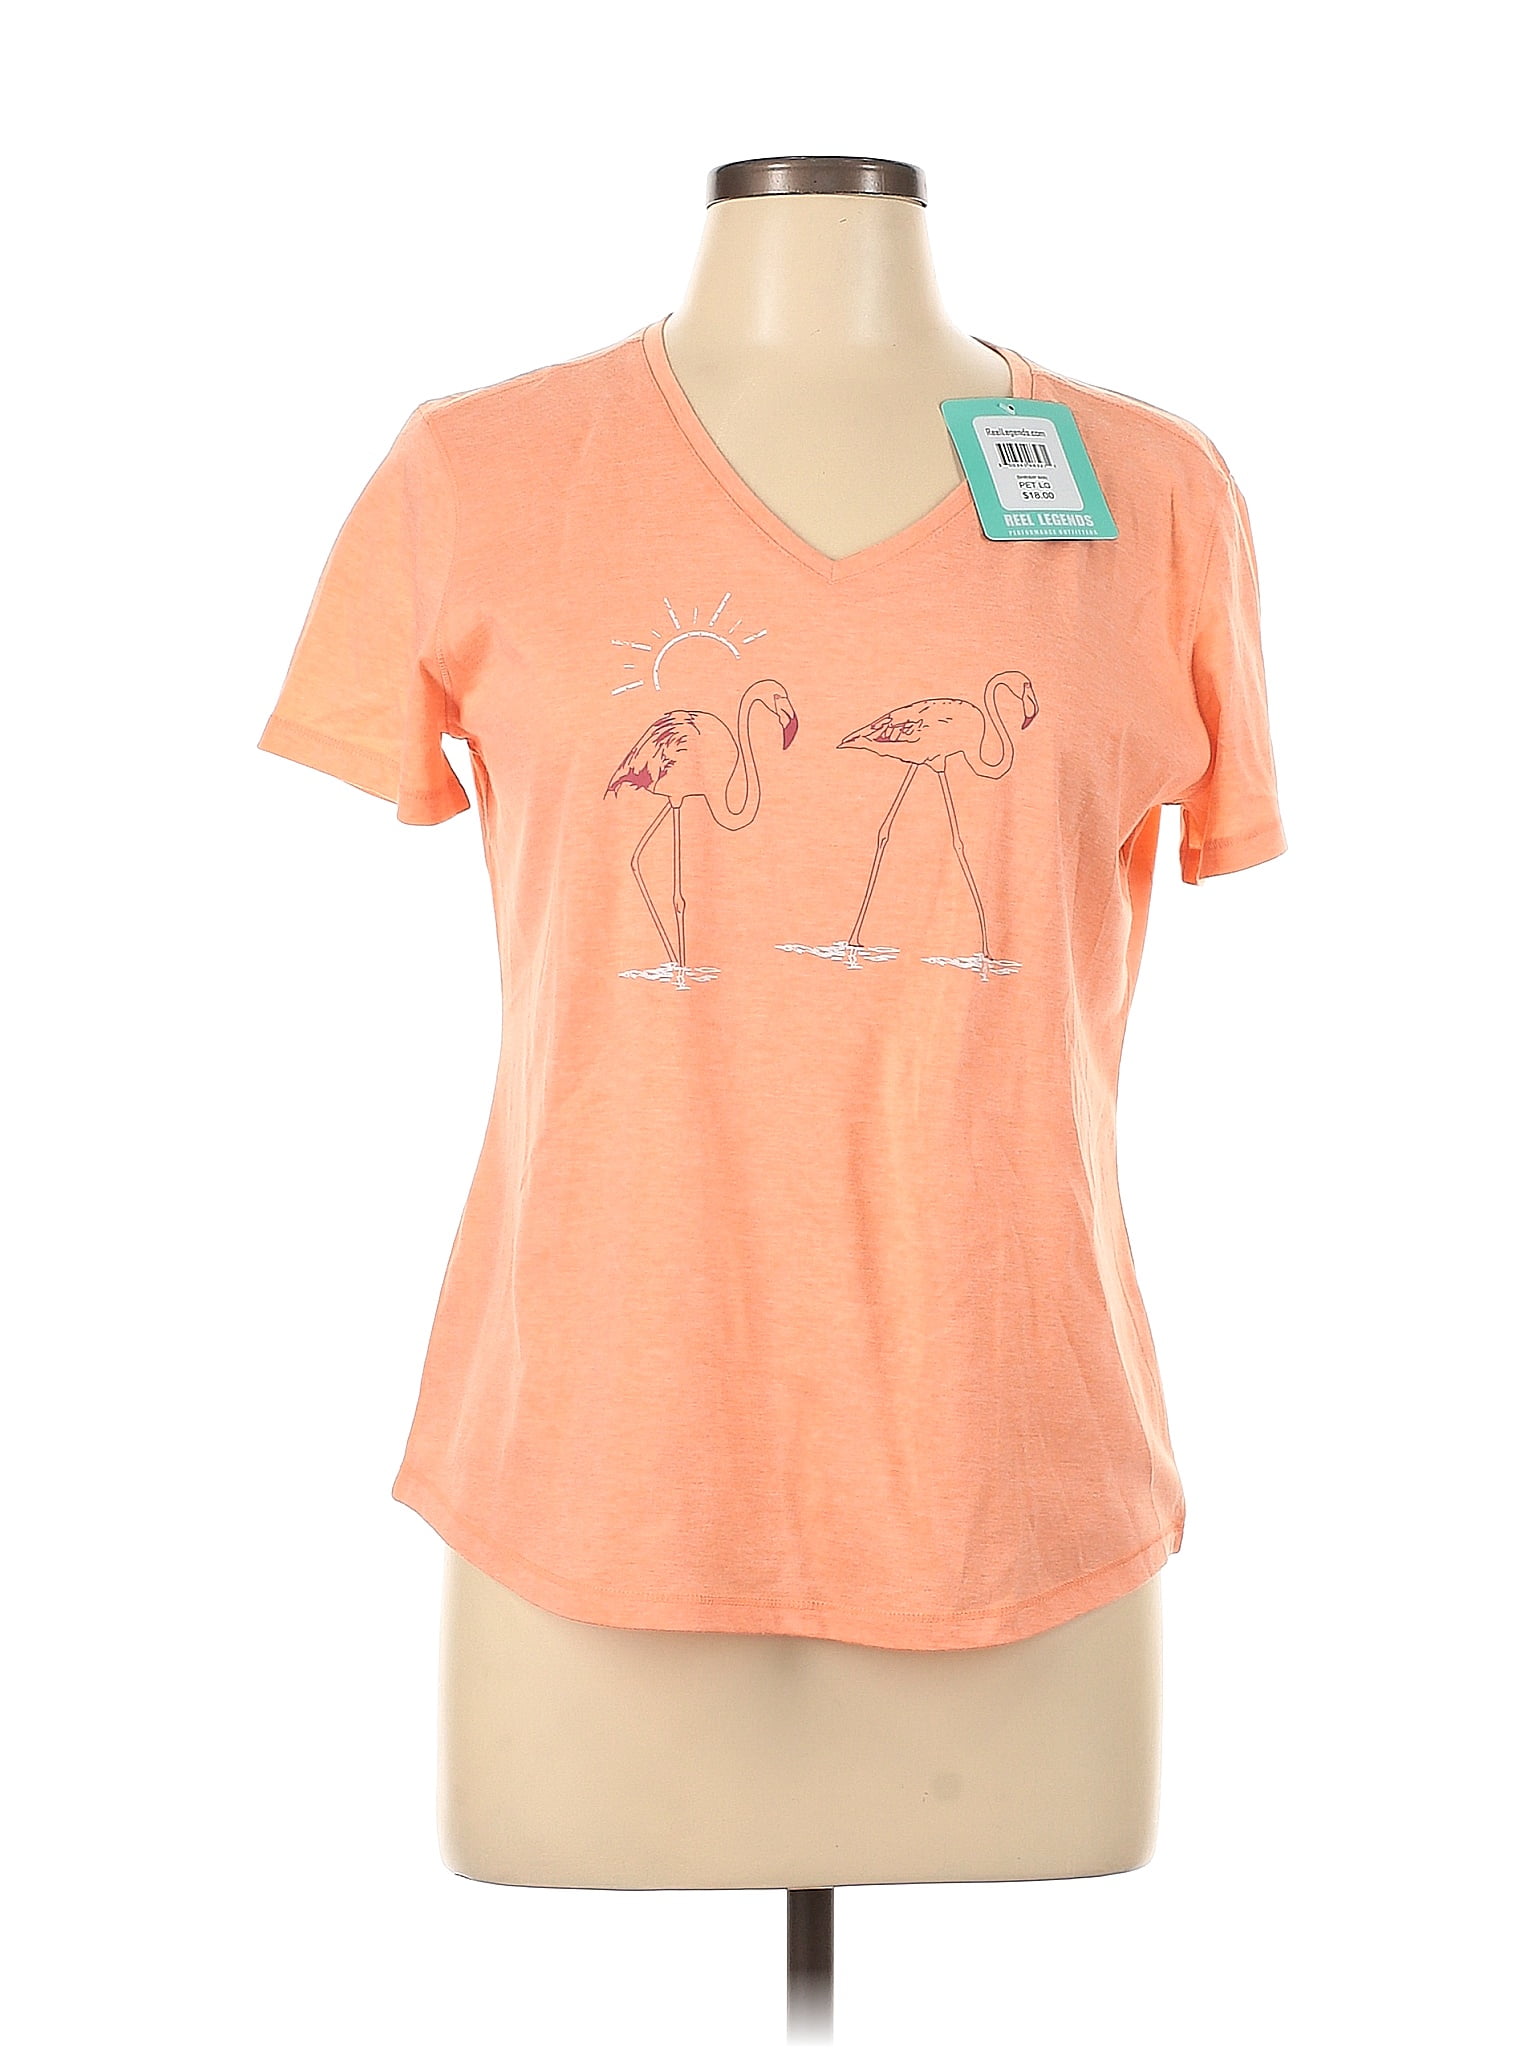 Reel Legends Orange Short Sleeve T-Shirt Size L (Petite) - 33% off